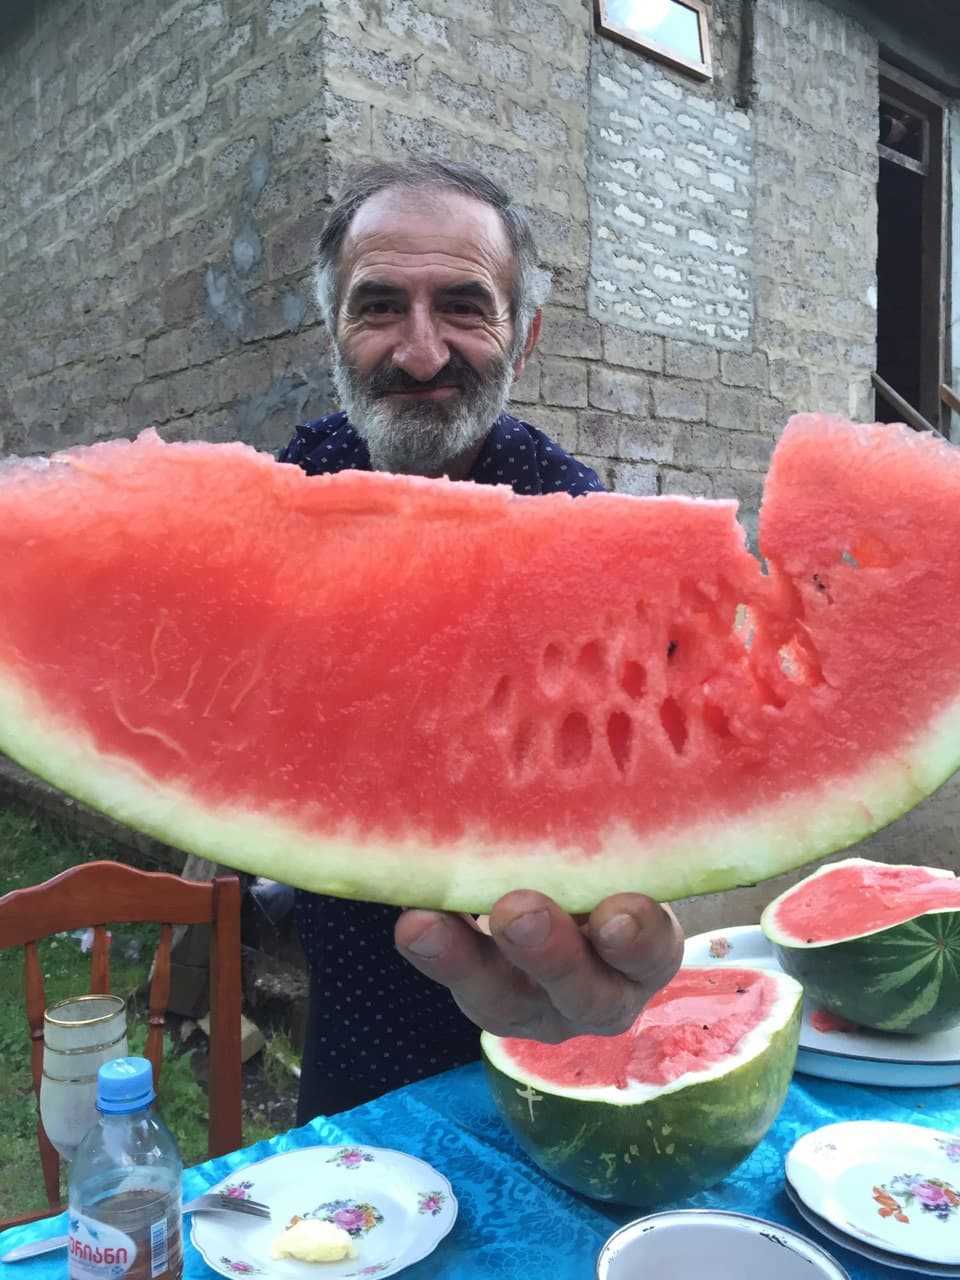 A slice of Giorgi‘s watermelon. Credits: Morena Buser